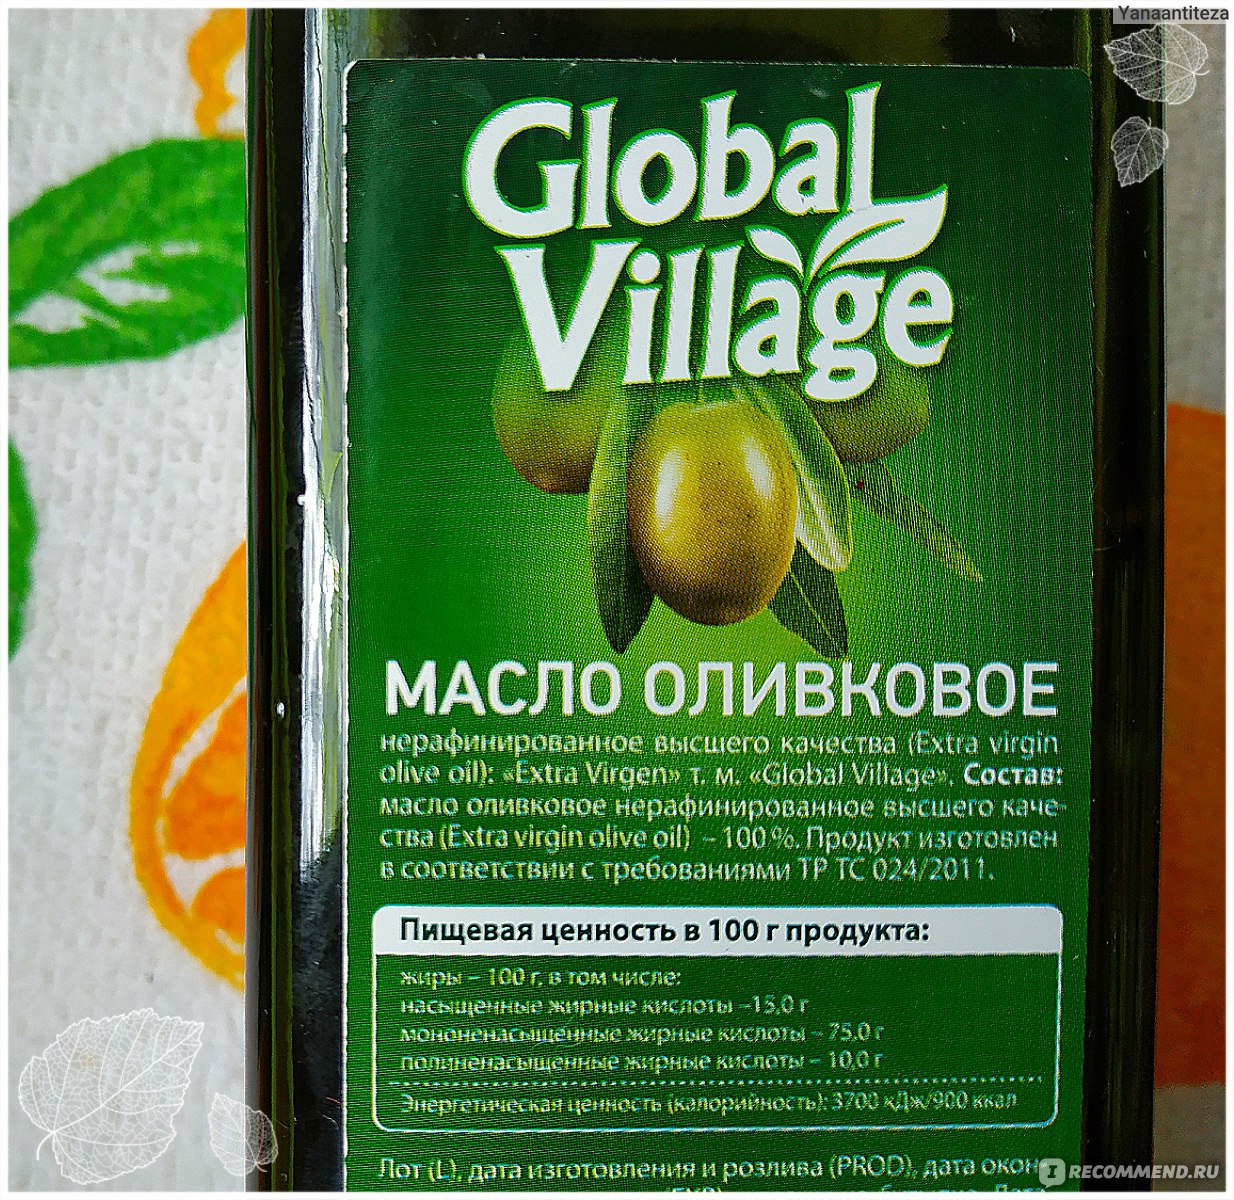 Оливковое масло глобал виладж. Оливковое масло Global Village. Глобал Вилладж масло оливковое. Оливковое масло Global Village Classic. Global Village оливковое масло кластк.